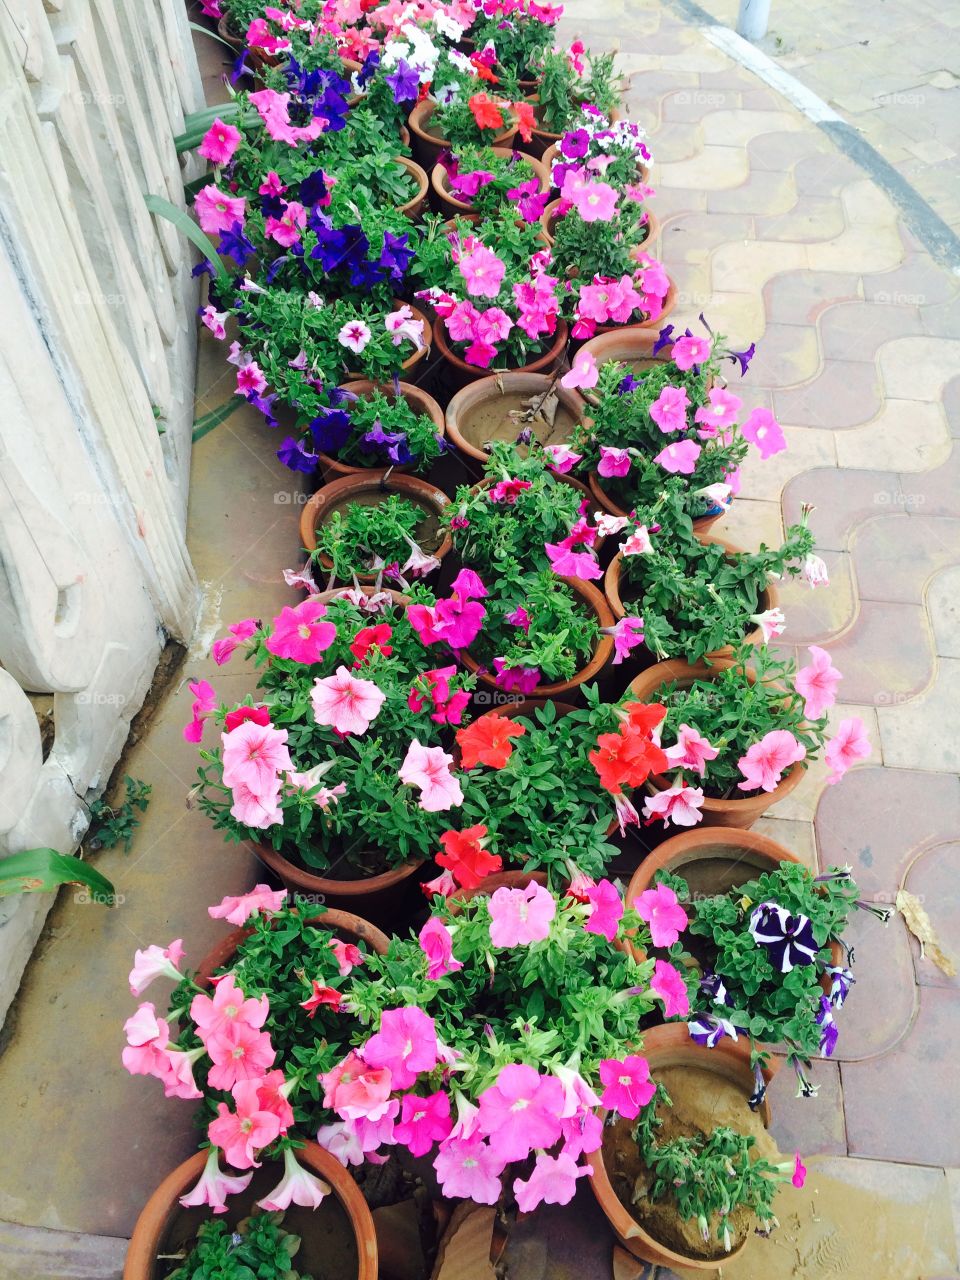 Flowers pots decorative street